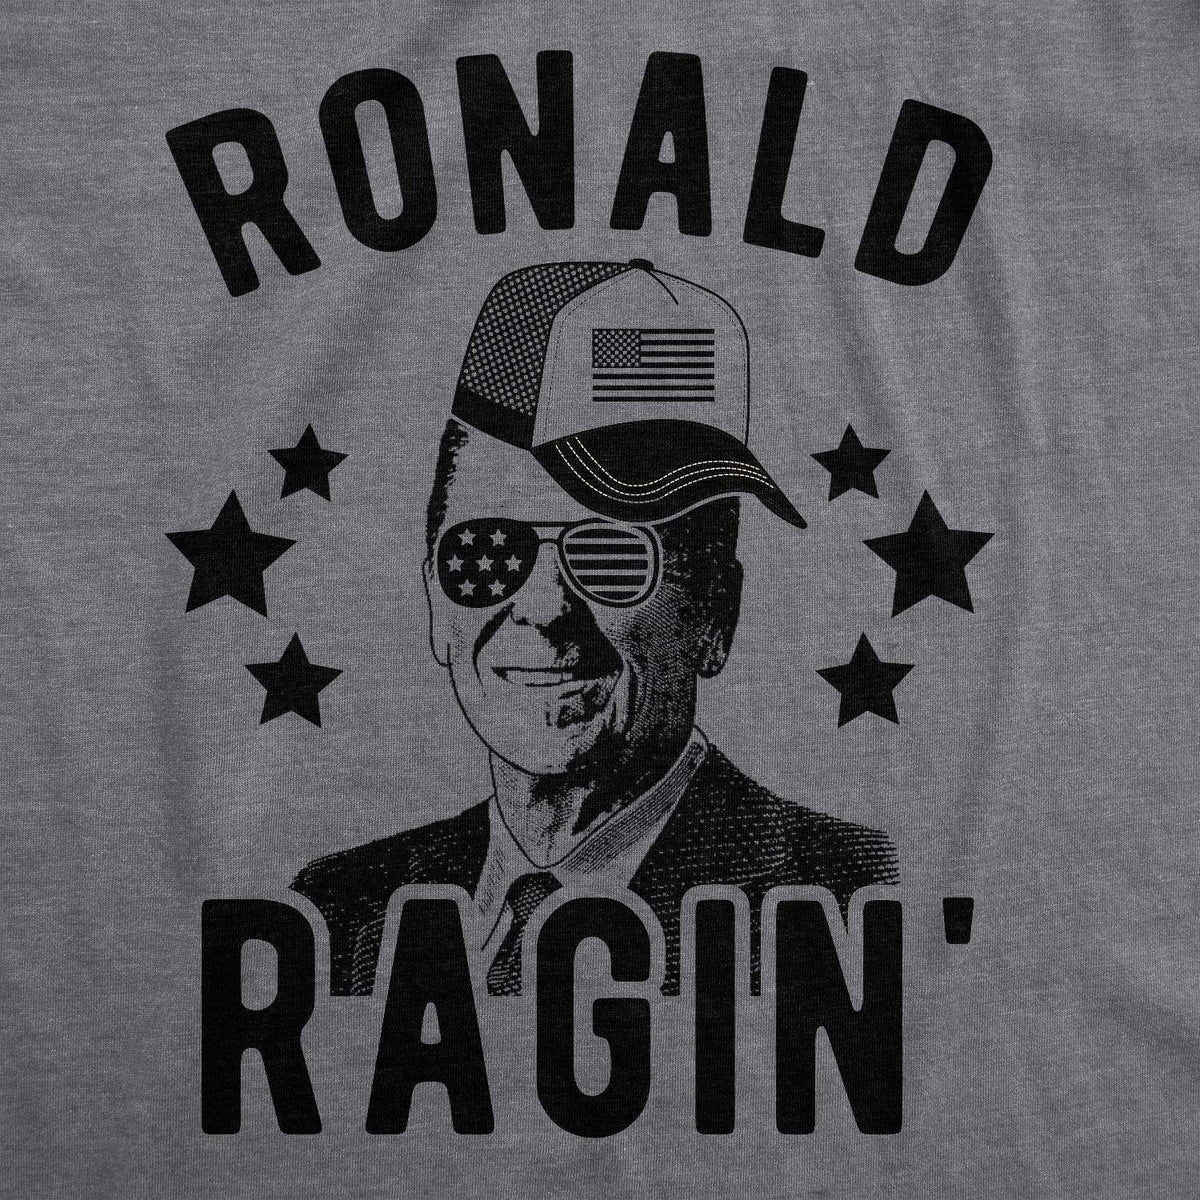 Ronald Ragin&#39; Men&#39;s Tshirt - Crazy Dog T-Shirts